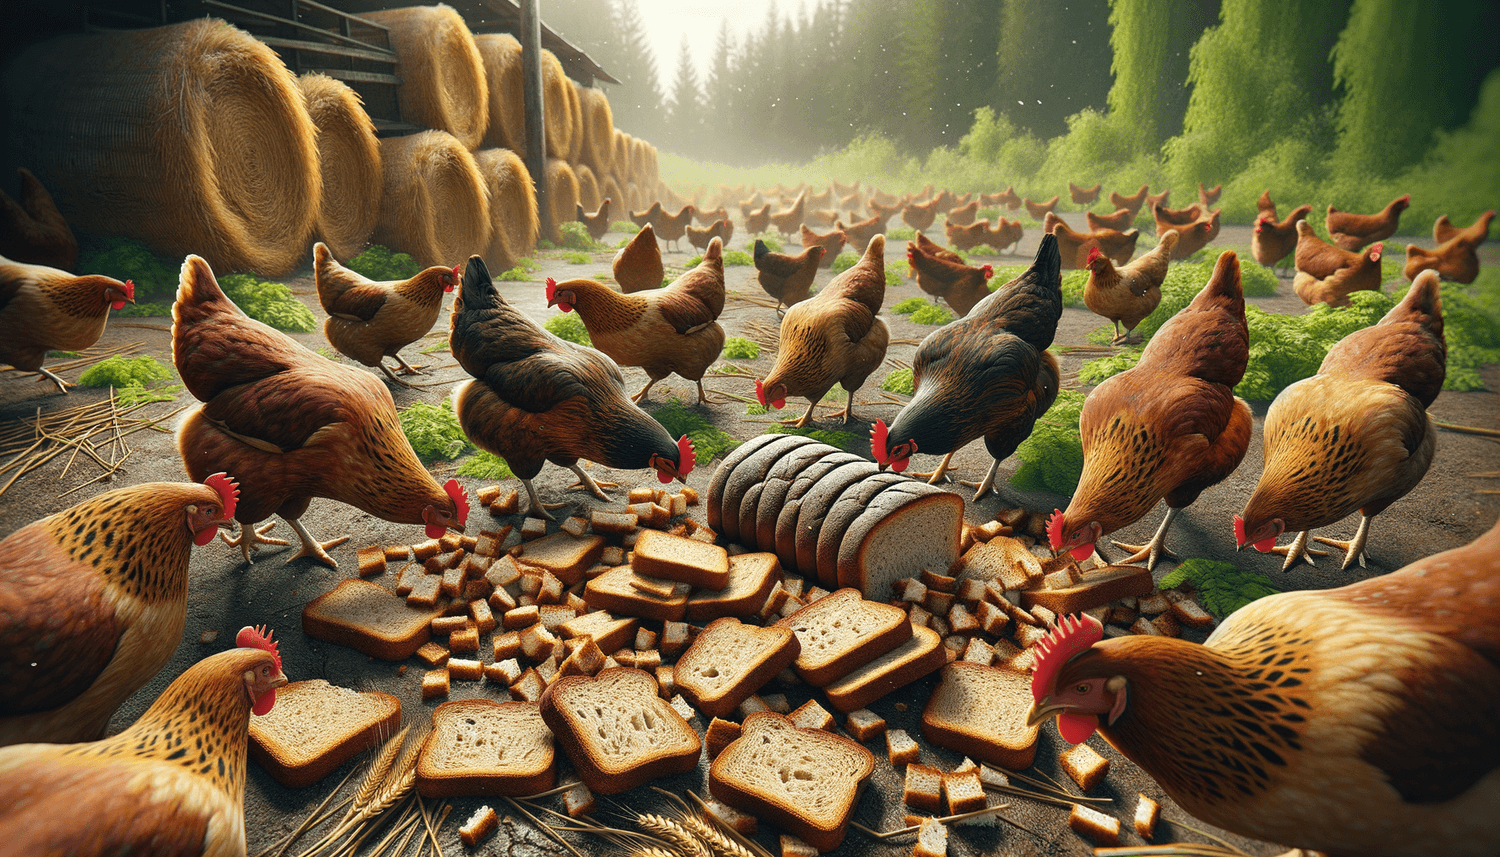 Can Chickens Eat Pumpernickel Bread?